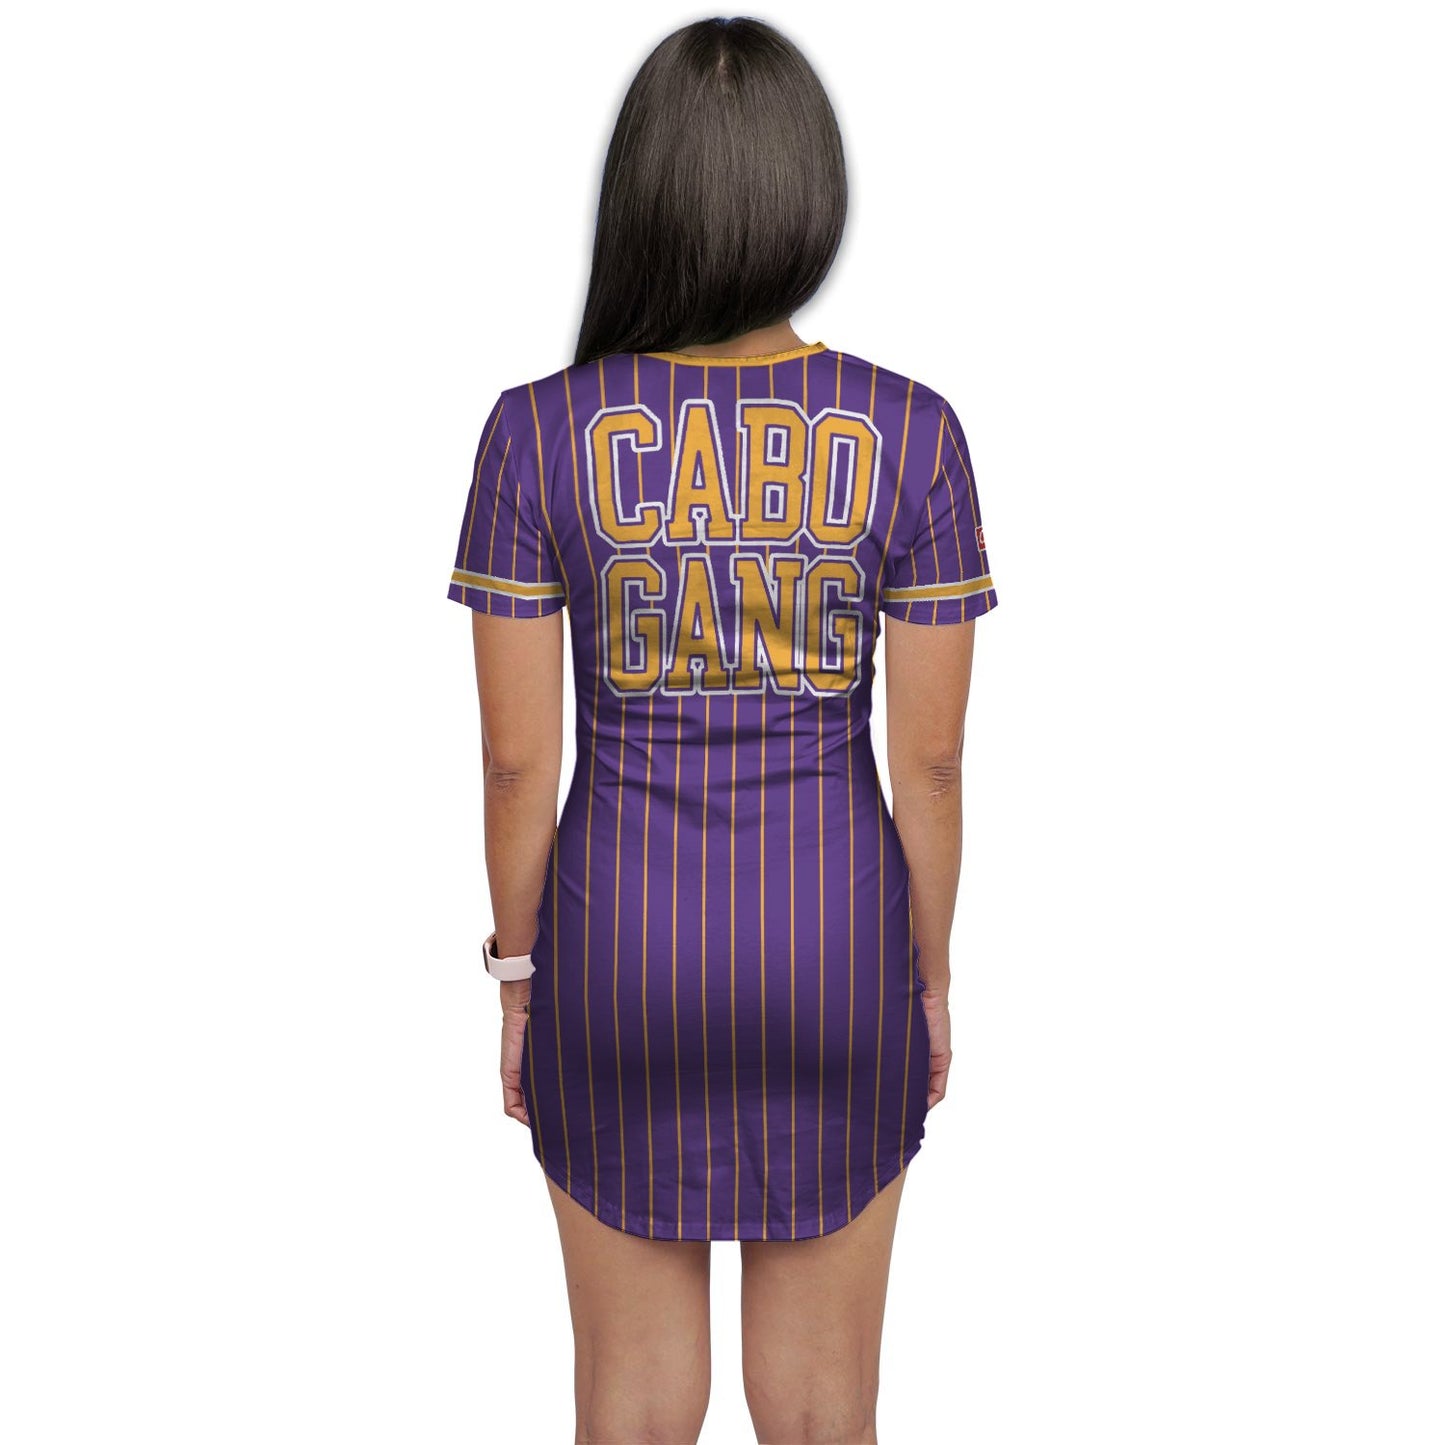 Kriola T-shirt Dress " CABOGANG" purple/yellow - CVC Streetwear